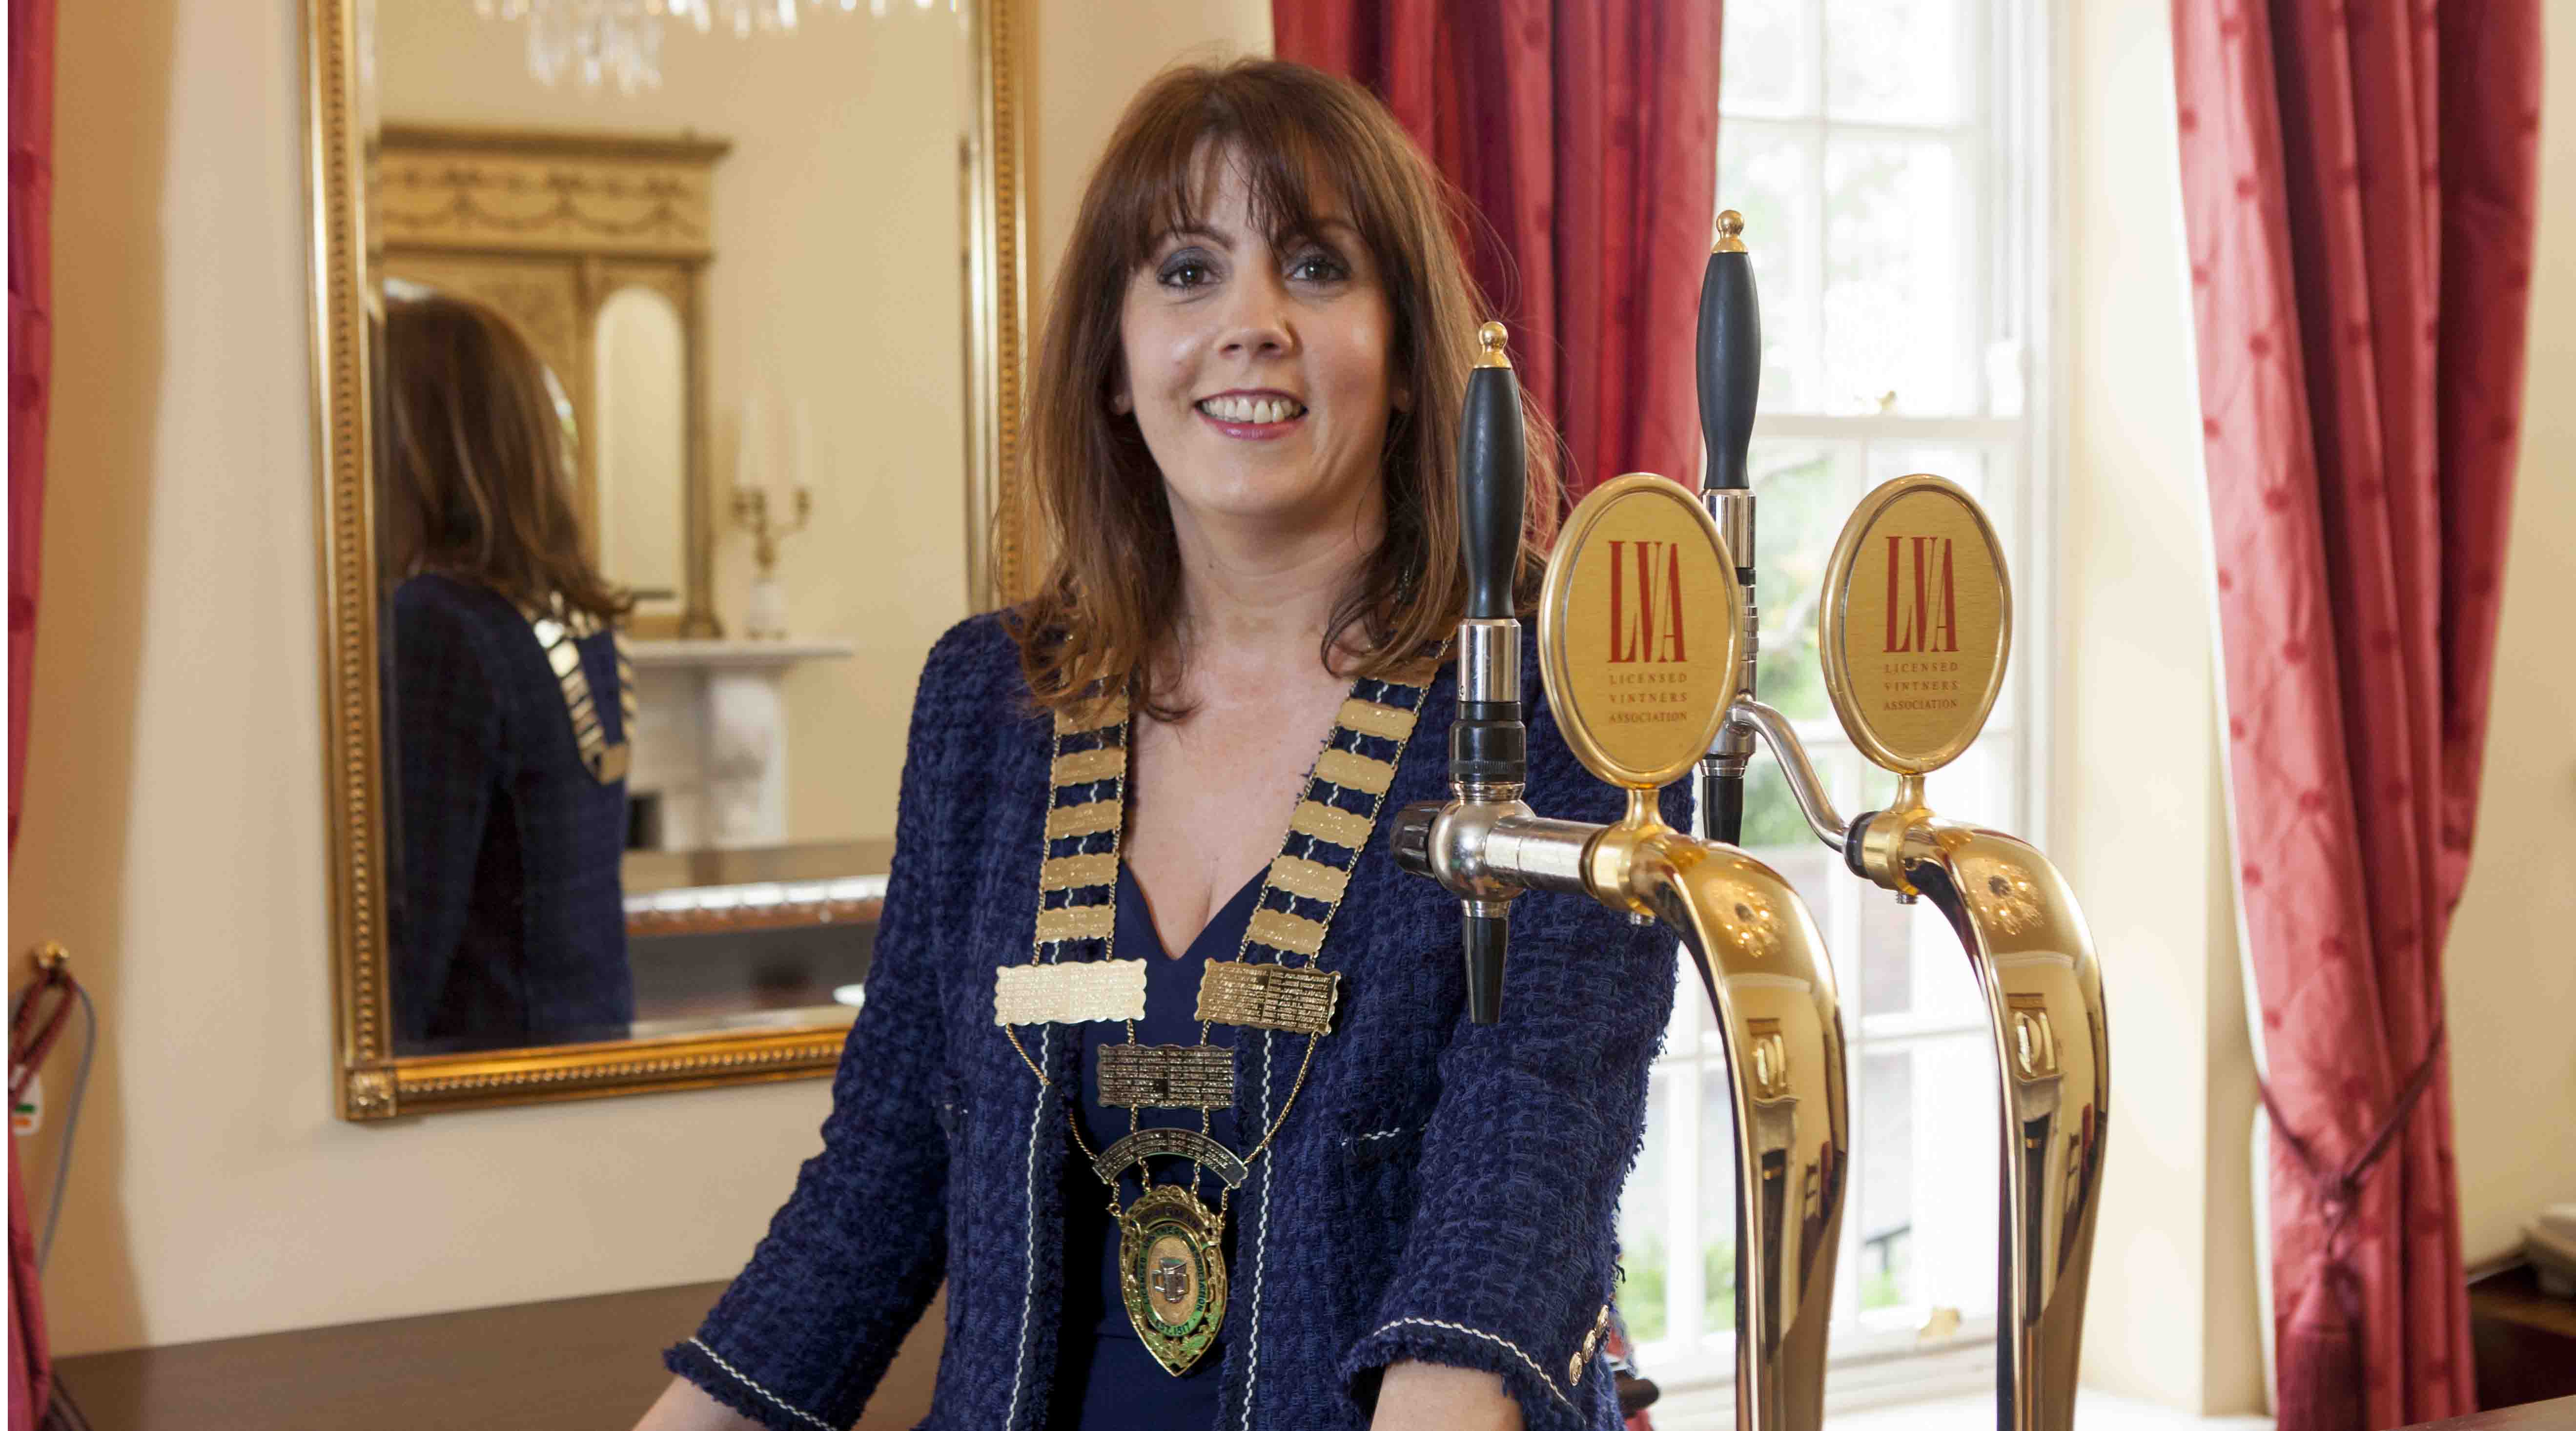 Deirdre Devitt helps elaborate on the LVA's Bicentennial pub-goers survey